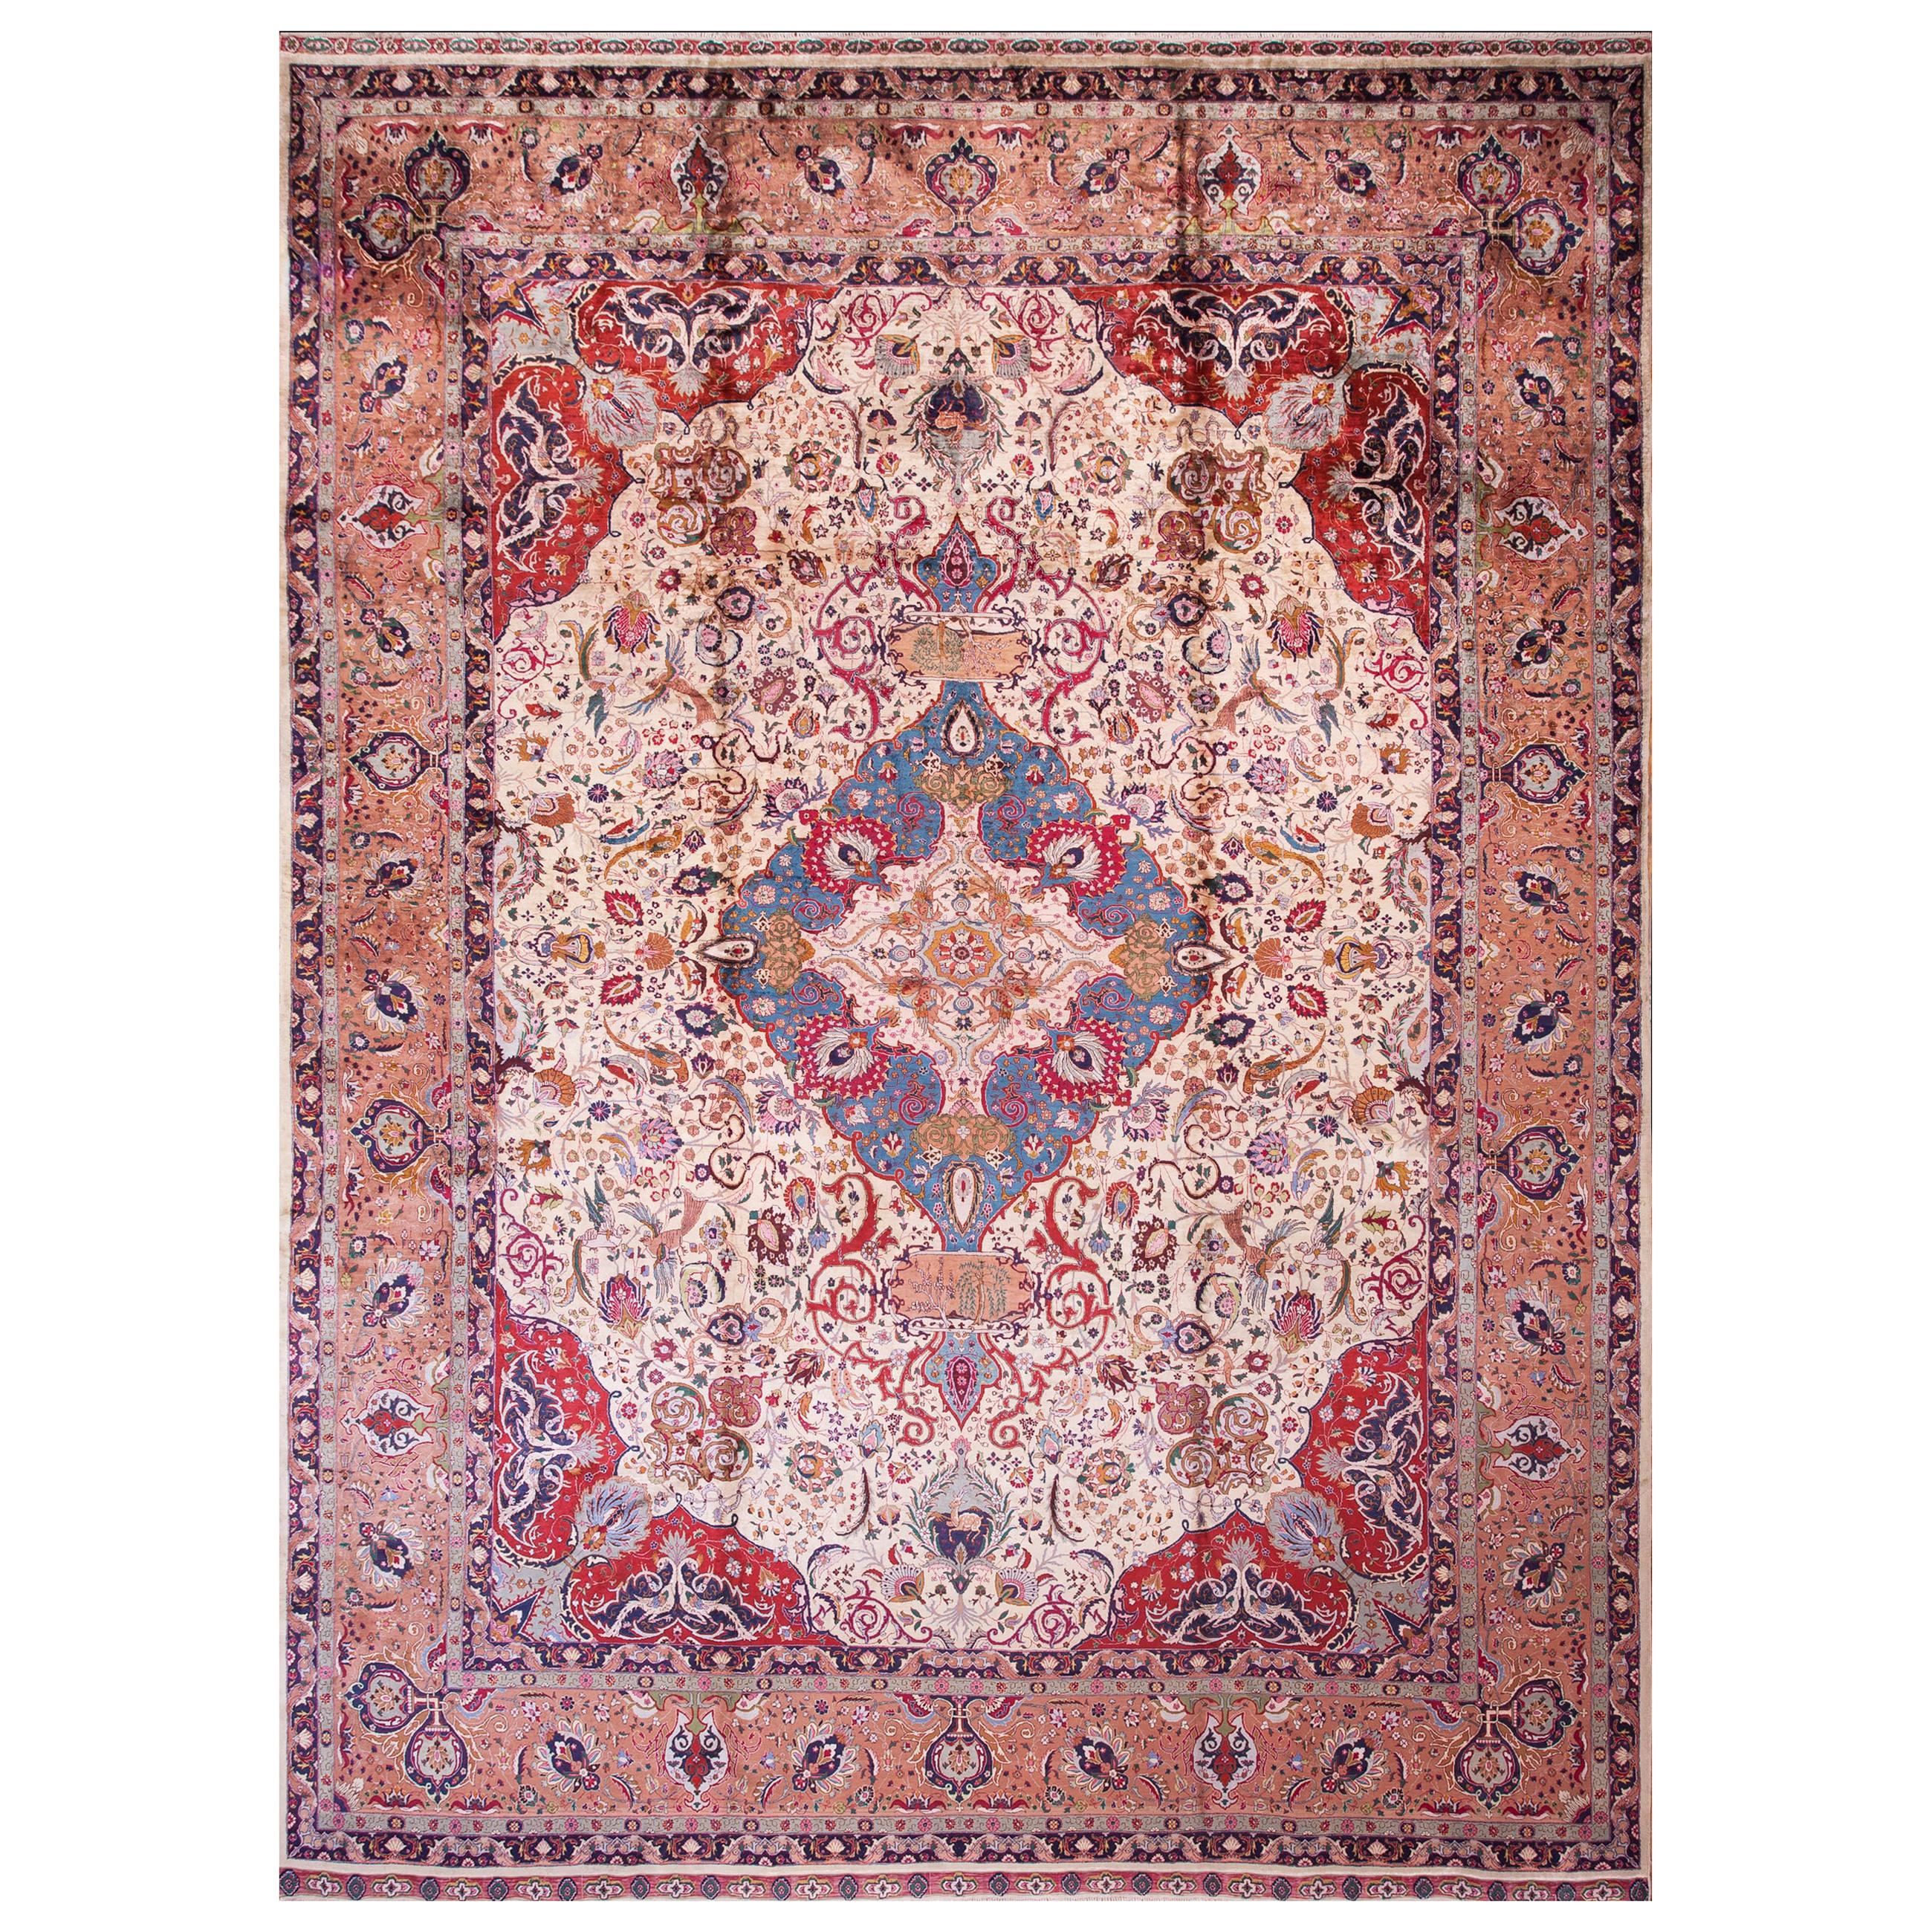 Early 20th Century Persian Silk Tabriz Carpet ( 10' x 13'8" - 305 x 417 )